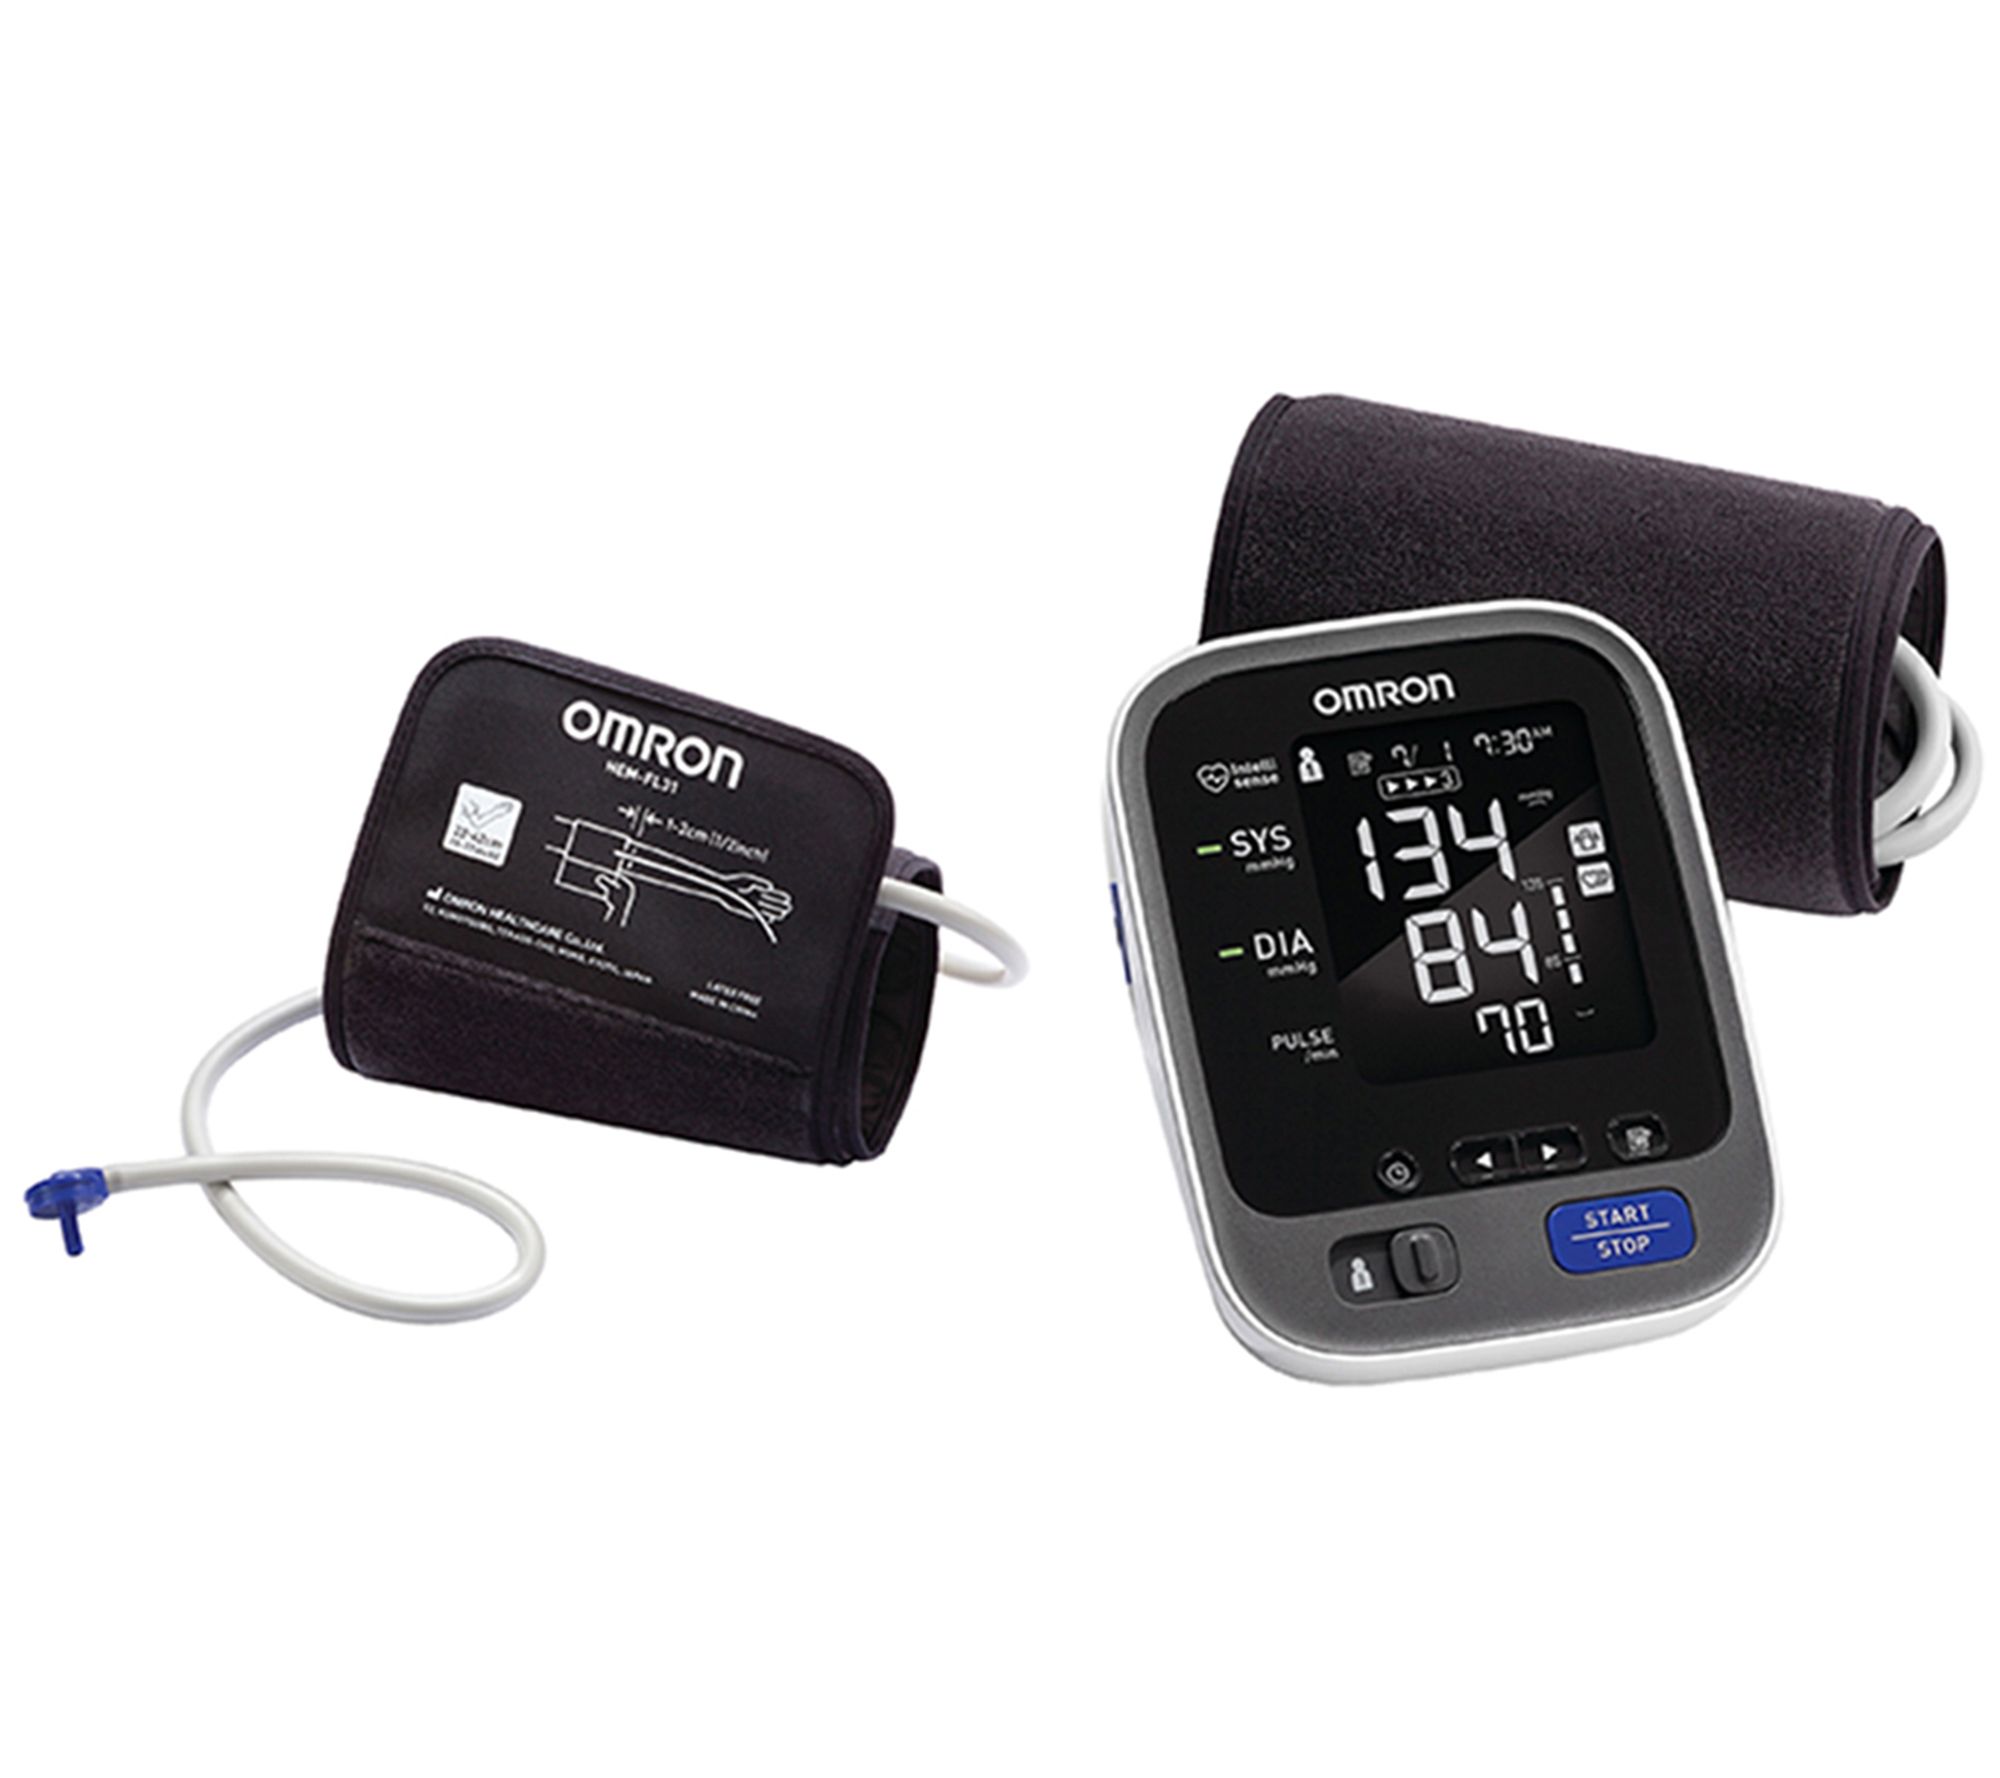 Omron 10 Series Upper Arm Blood Pressure Monitor & ComFit Cuf